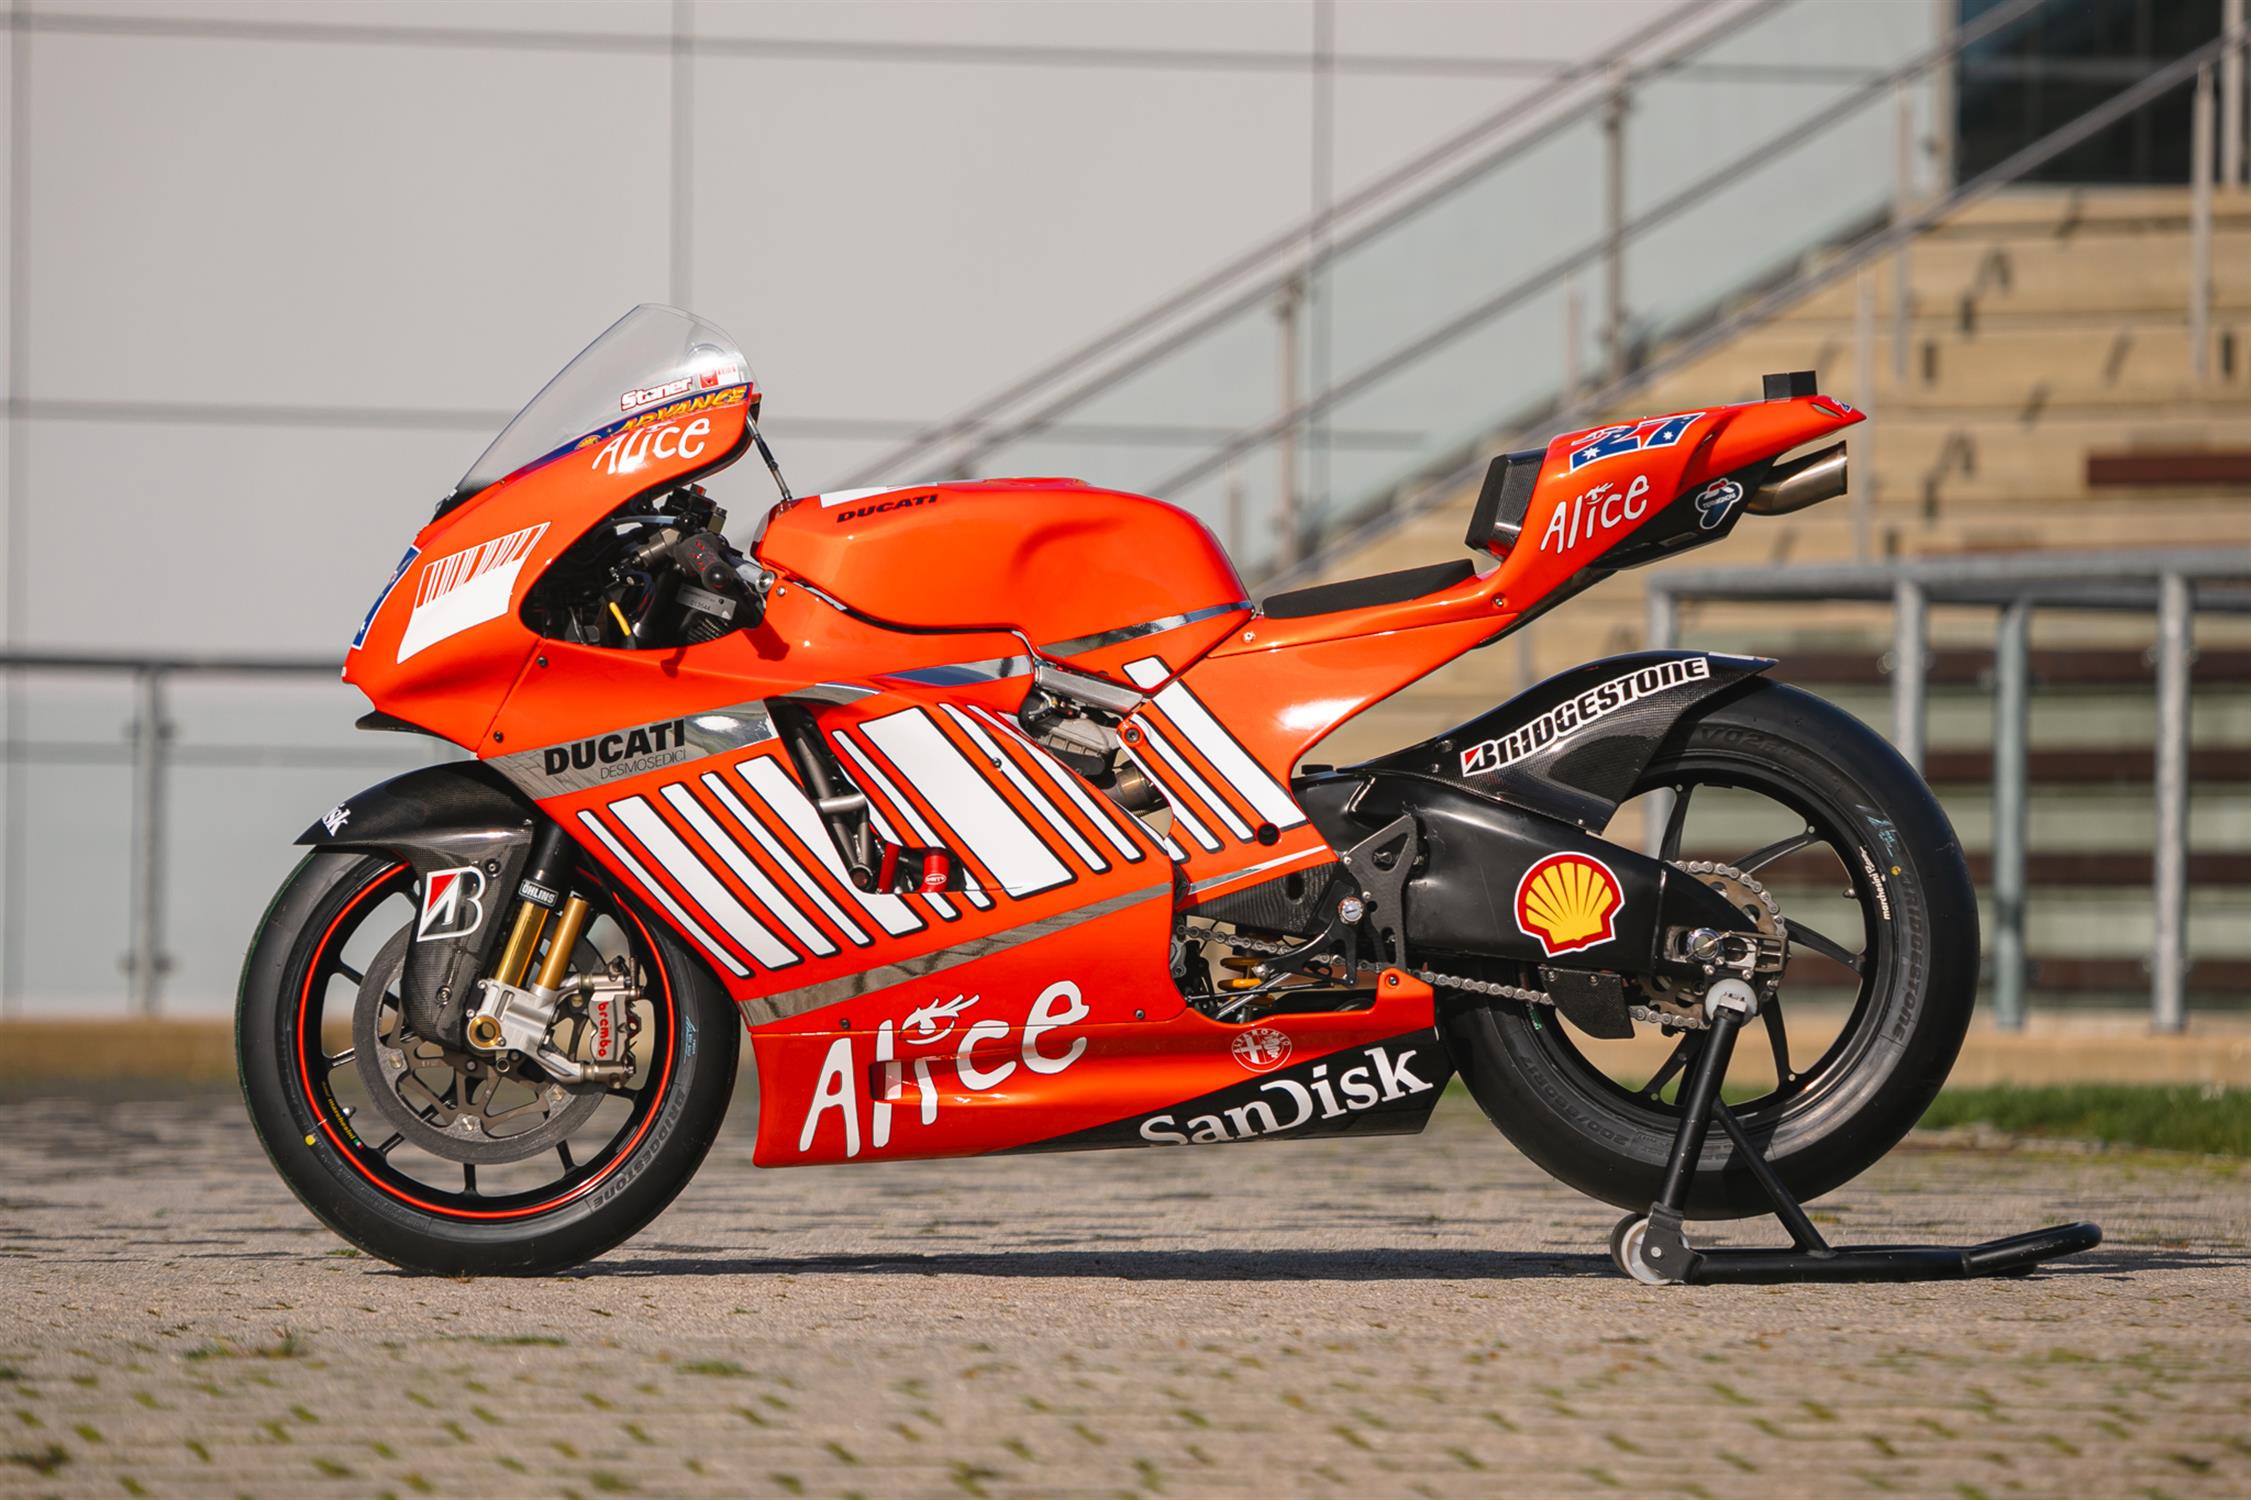 2007 Ducati Desmosedici GP7 799cc - Image 2 of 10